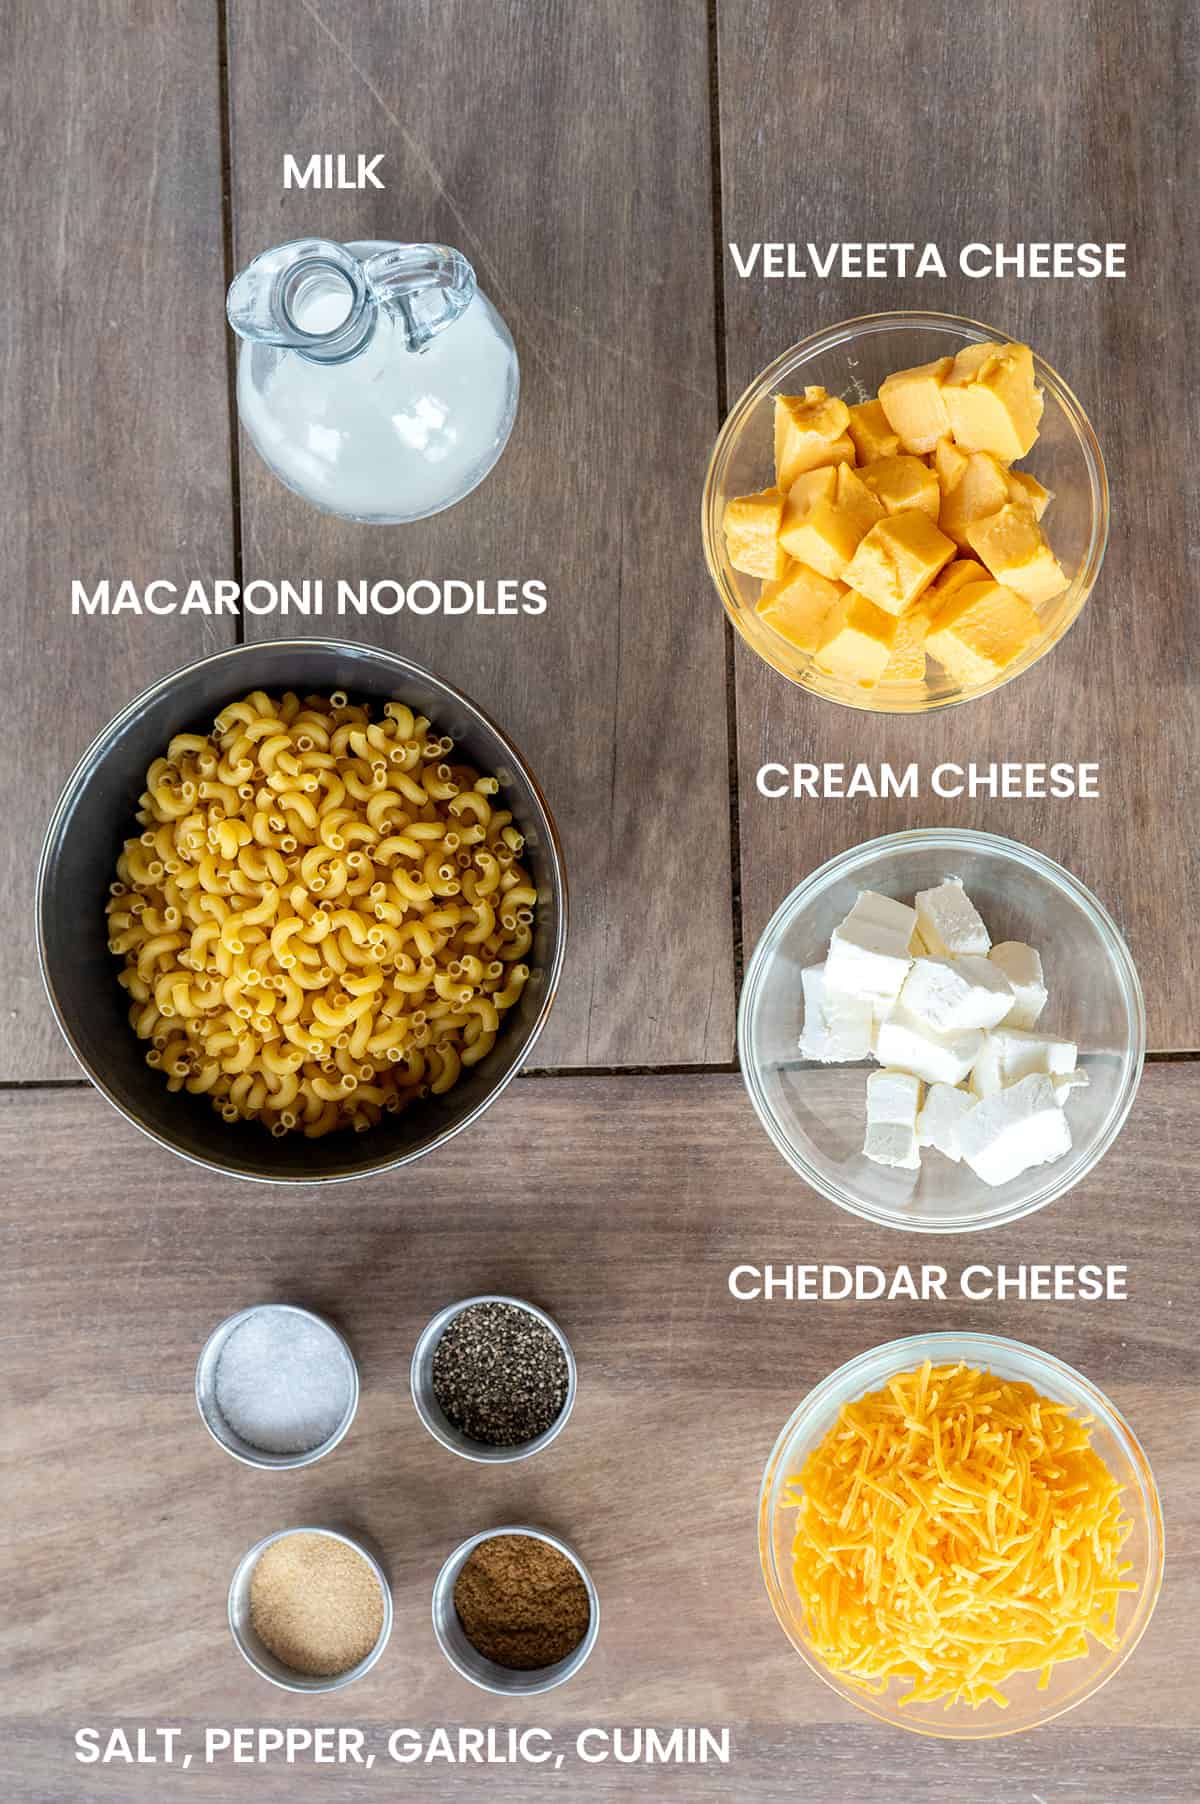 Smoked Mac and Cheese ingredients: milk, macaroni noodles, velveeta cheese, cream cheese, cheddar cheese, salt, pepper, garlic, cumin.